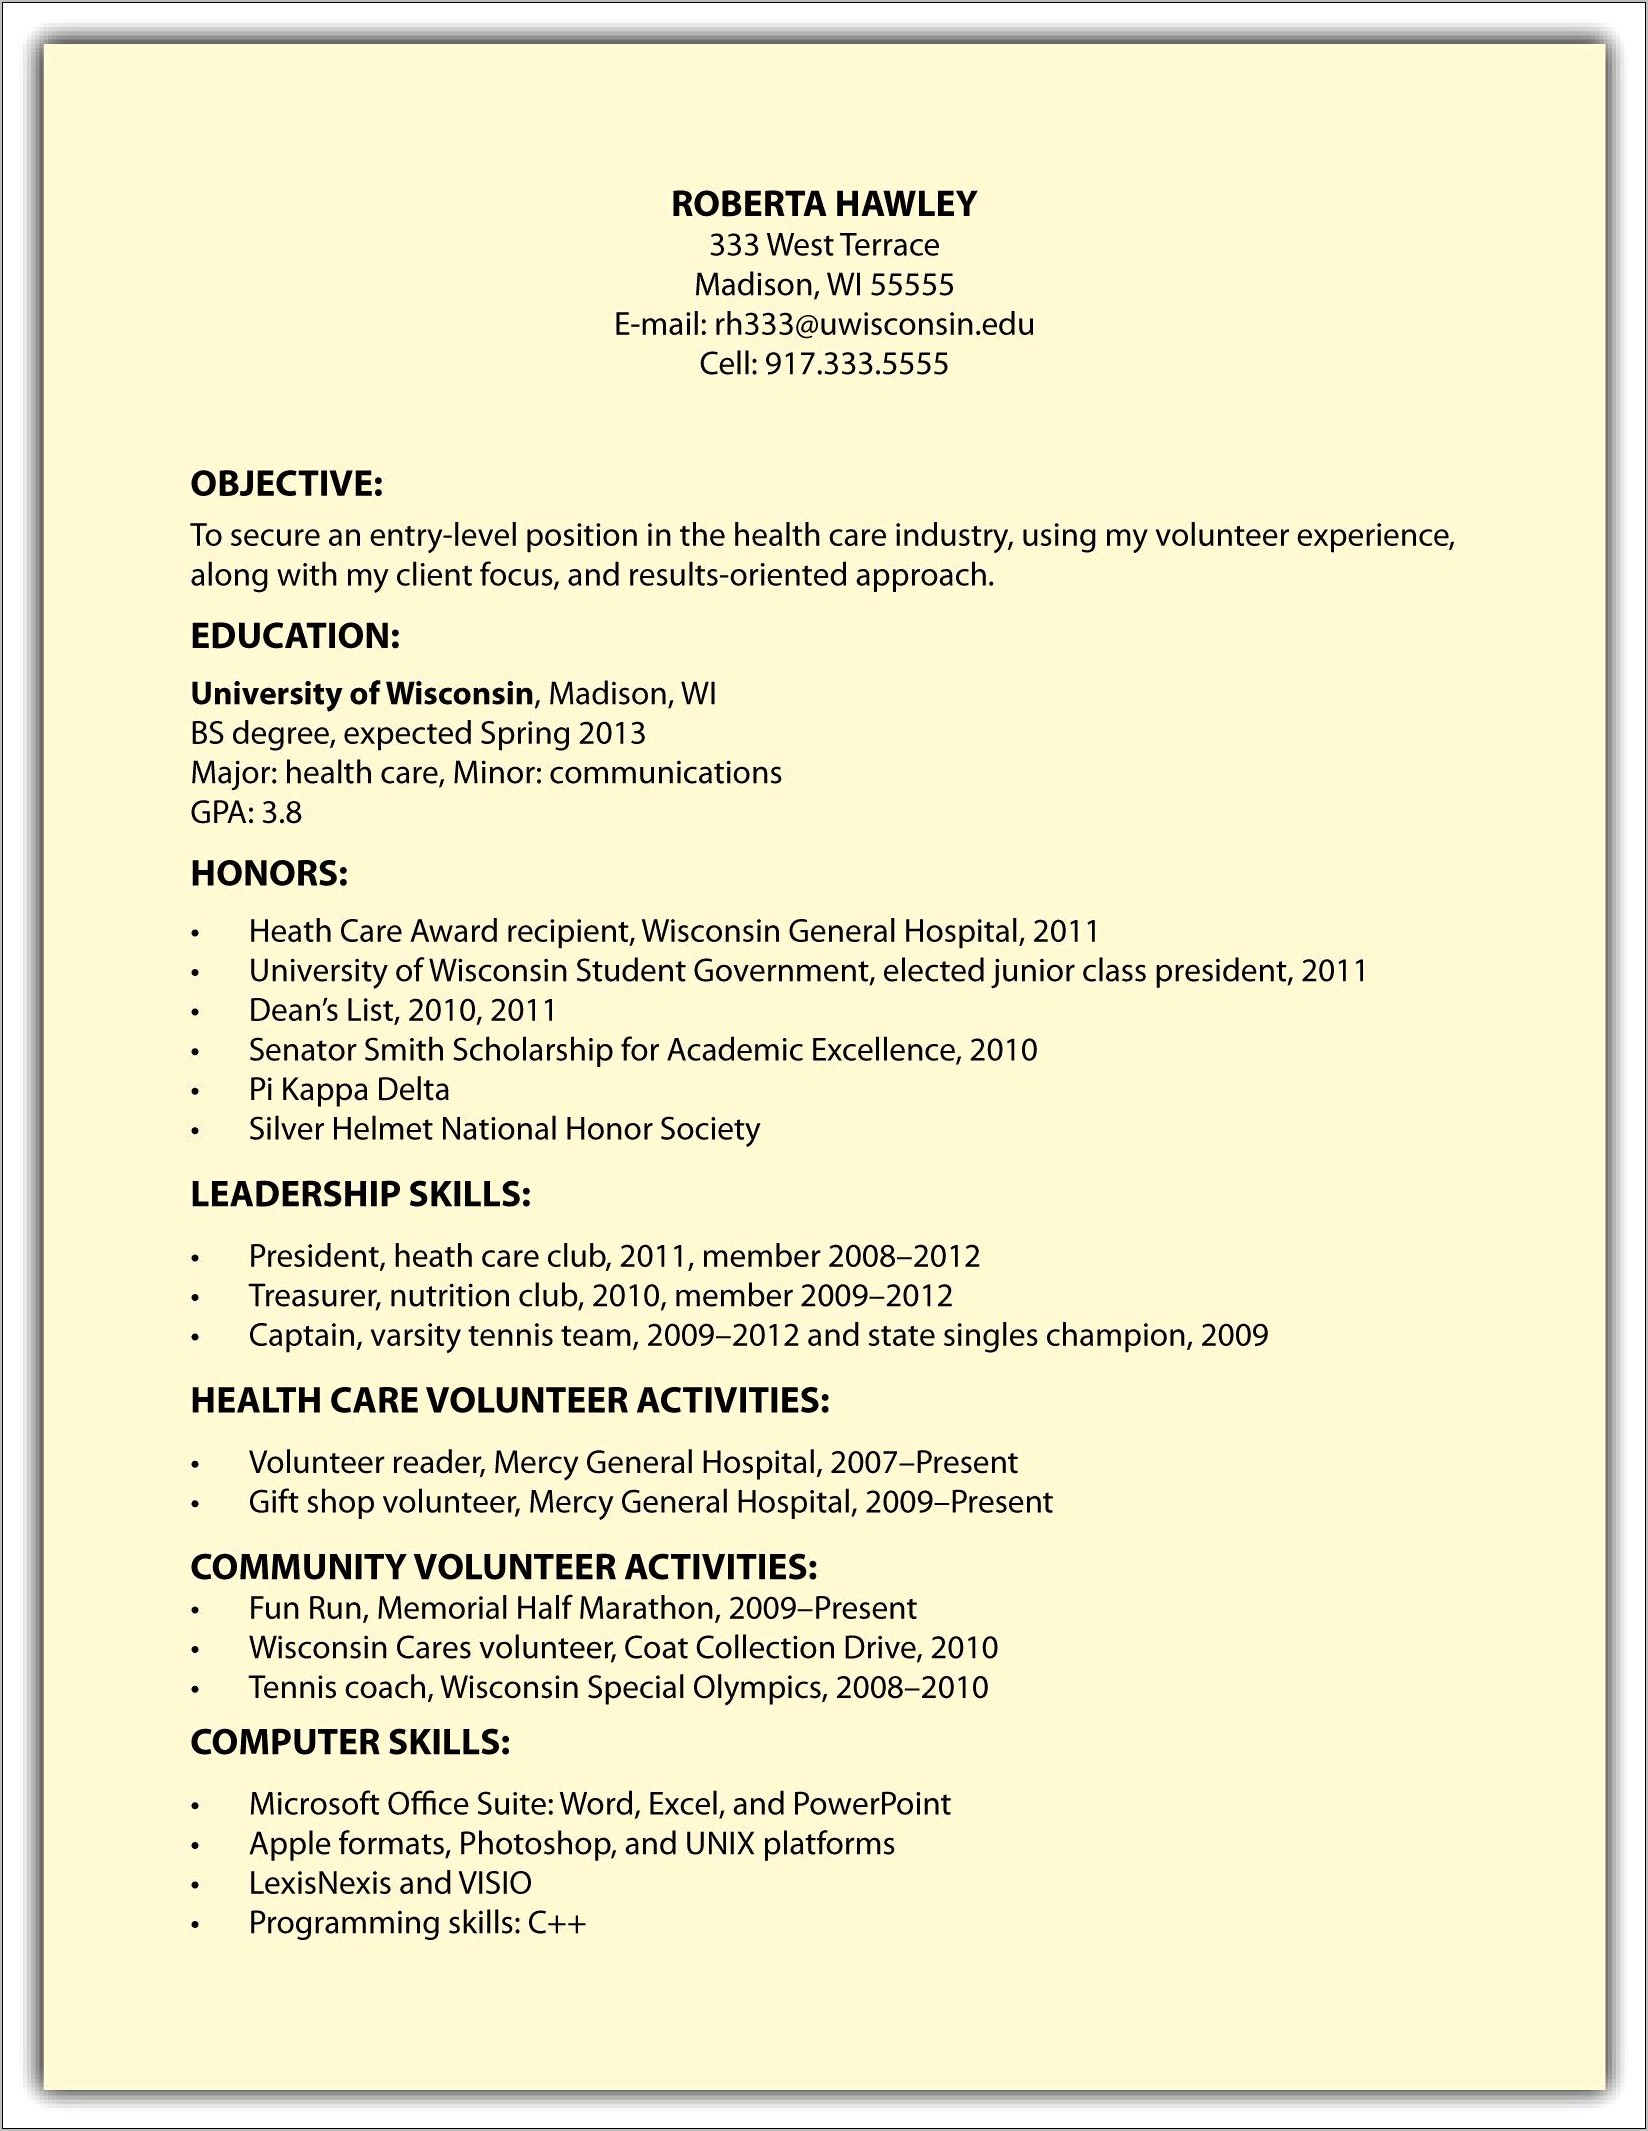 Sample Resume Objective For Volunteer Position